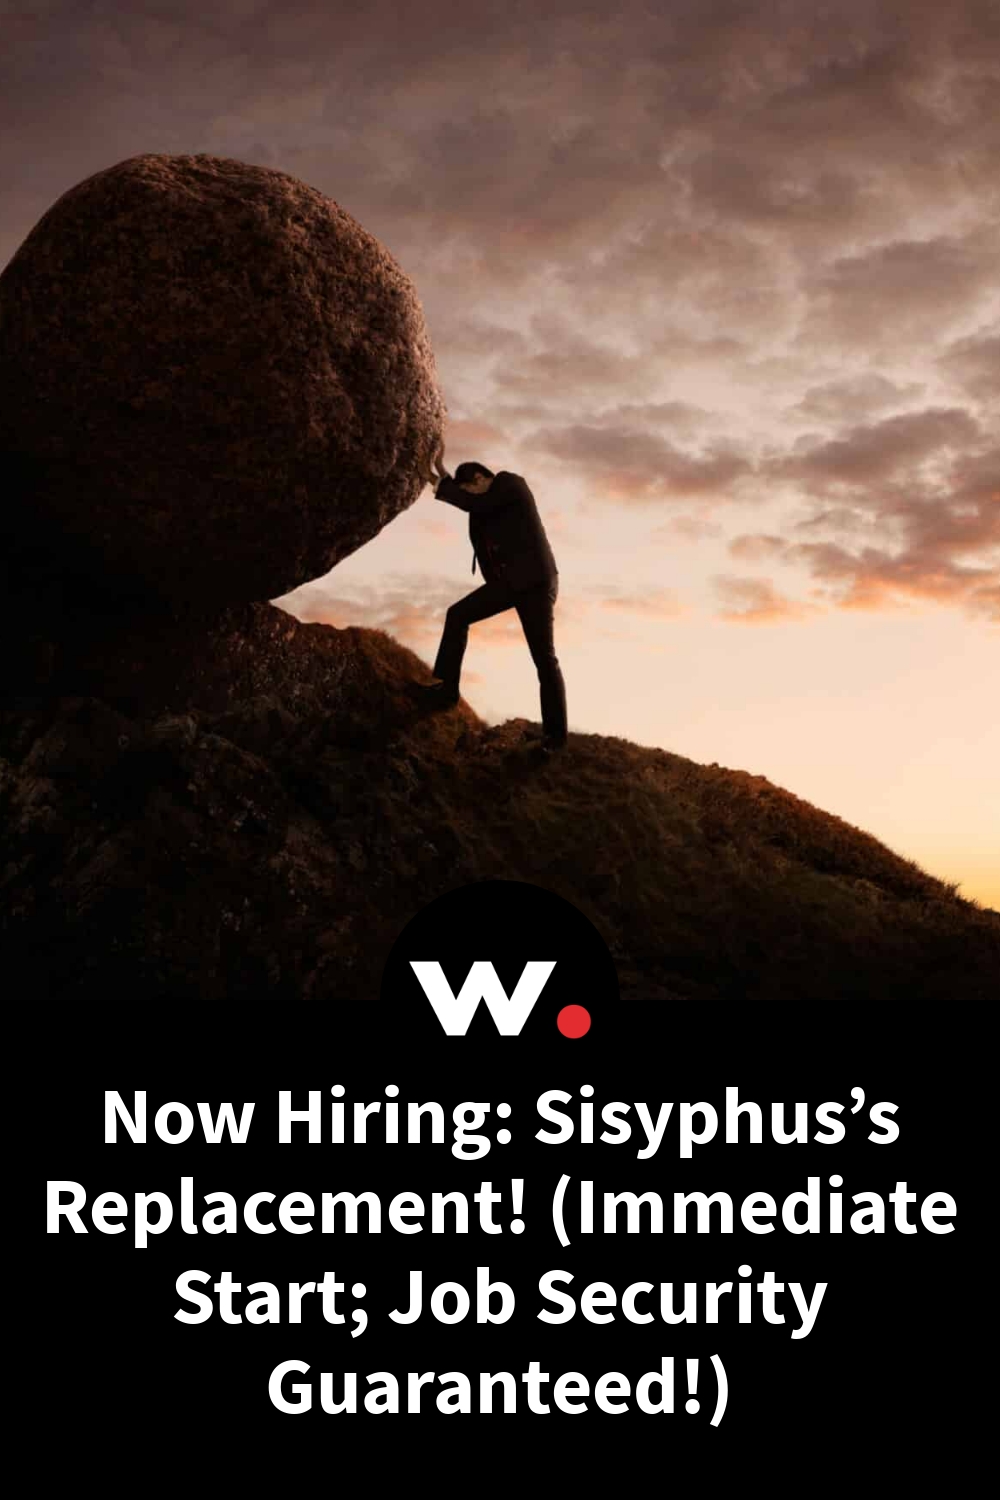 Now Hiring: Sisyphus’s Replacement! (Immediate Start; Job Security Guaranteed!)